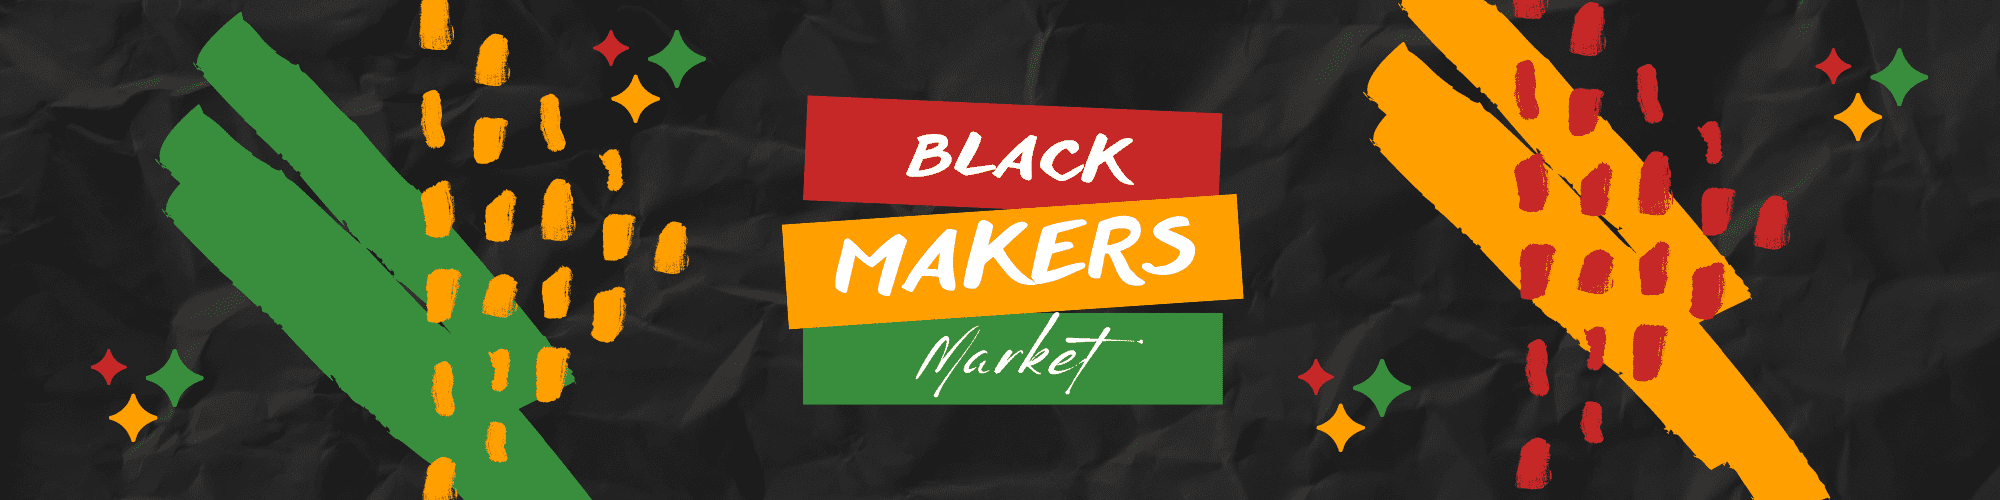 Black Makers Market Logo 2